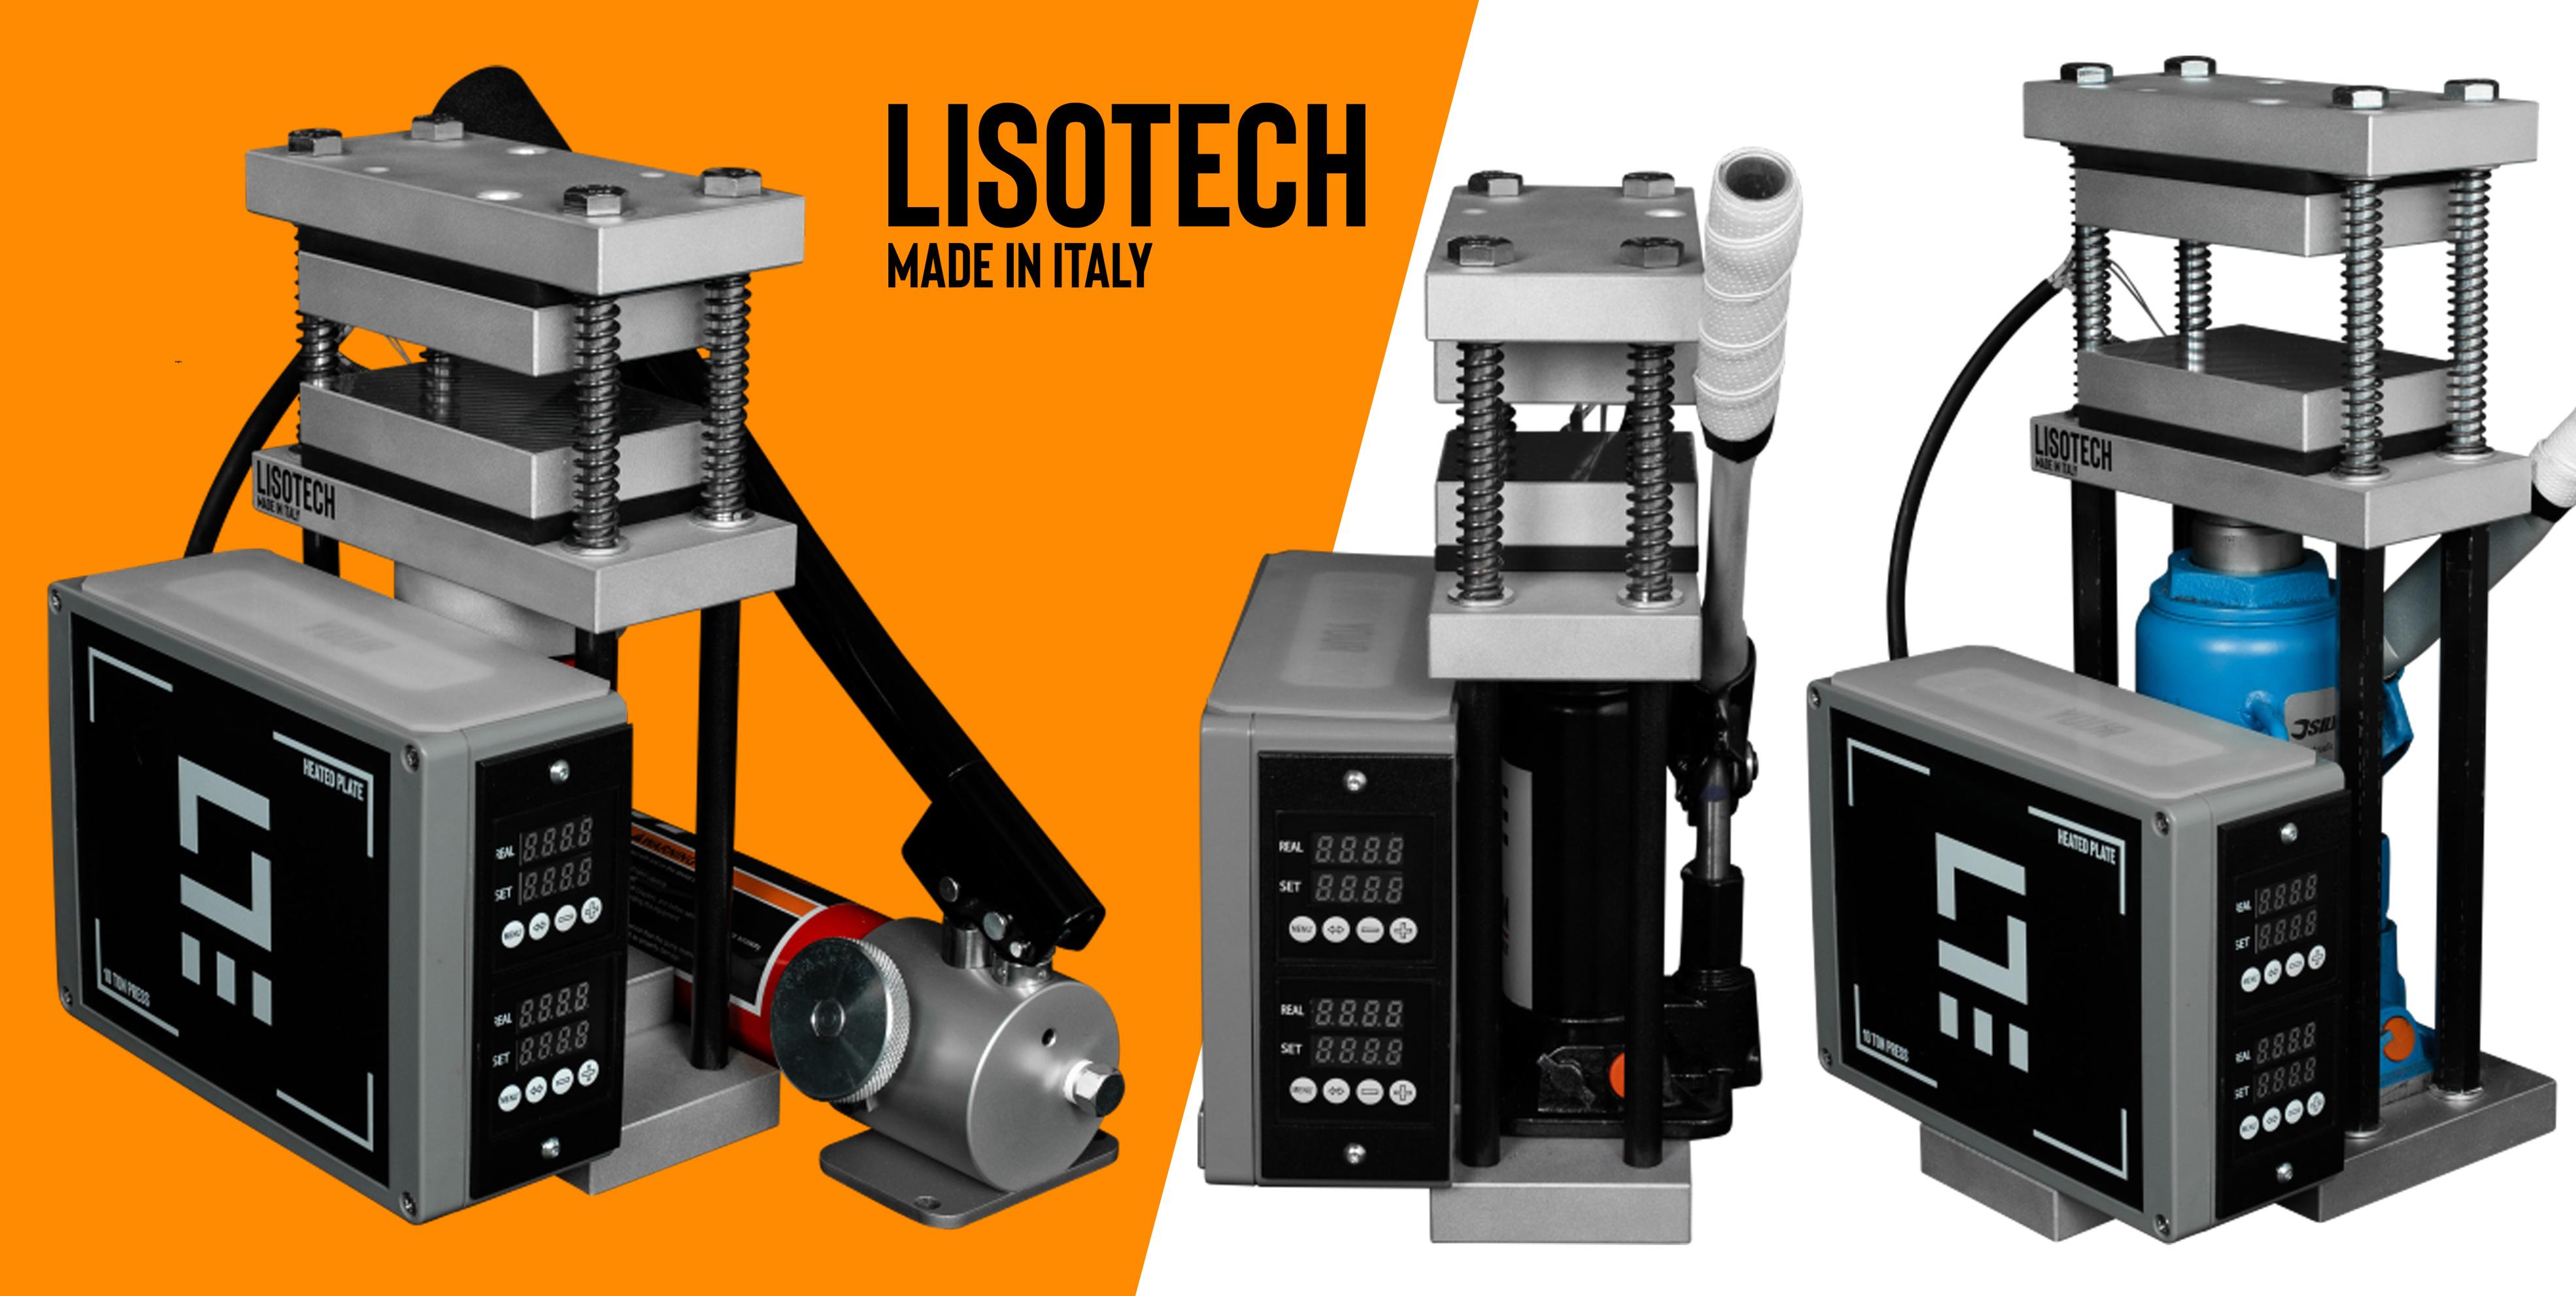 Lisotech Products - Headshop Italia distribution